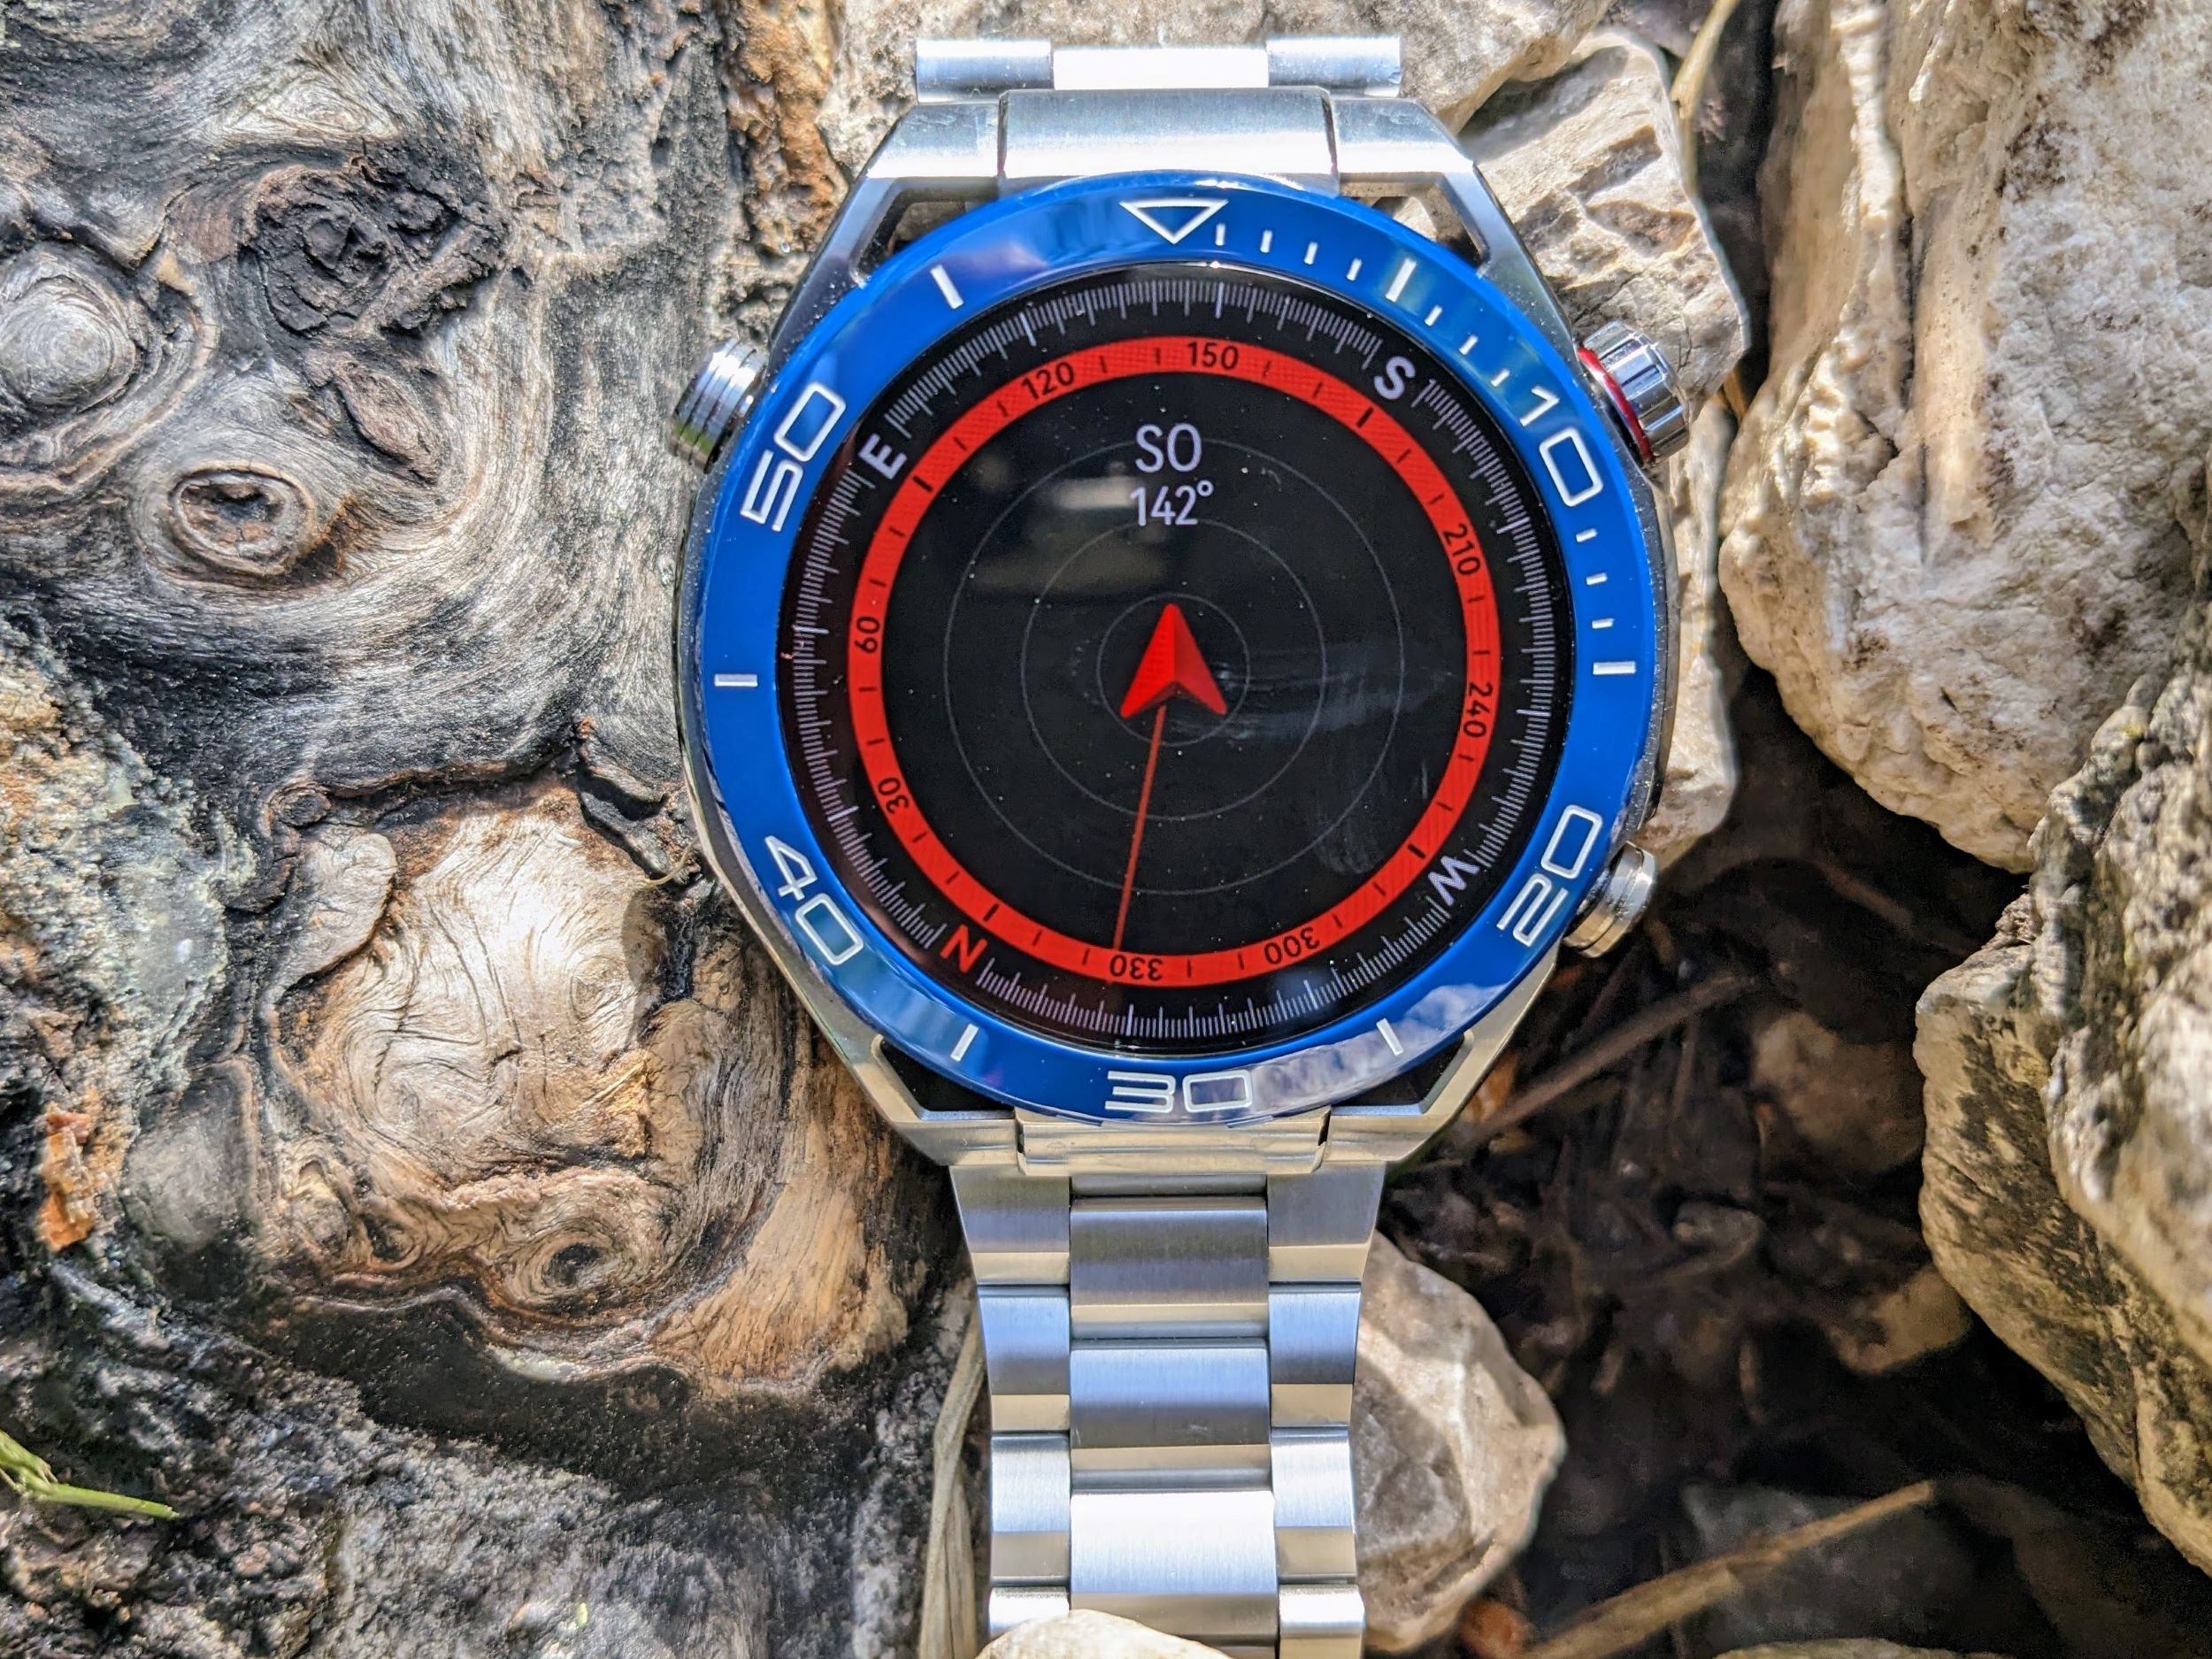 Smartwatch Huawei Watch Gt4 (gps) 46mm Gris Titanio